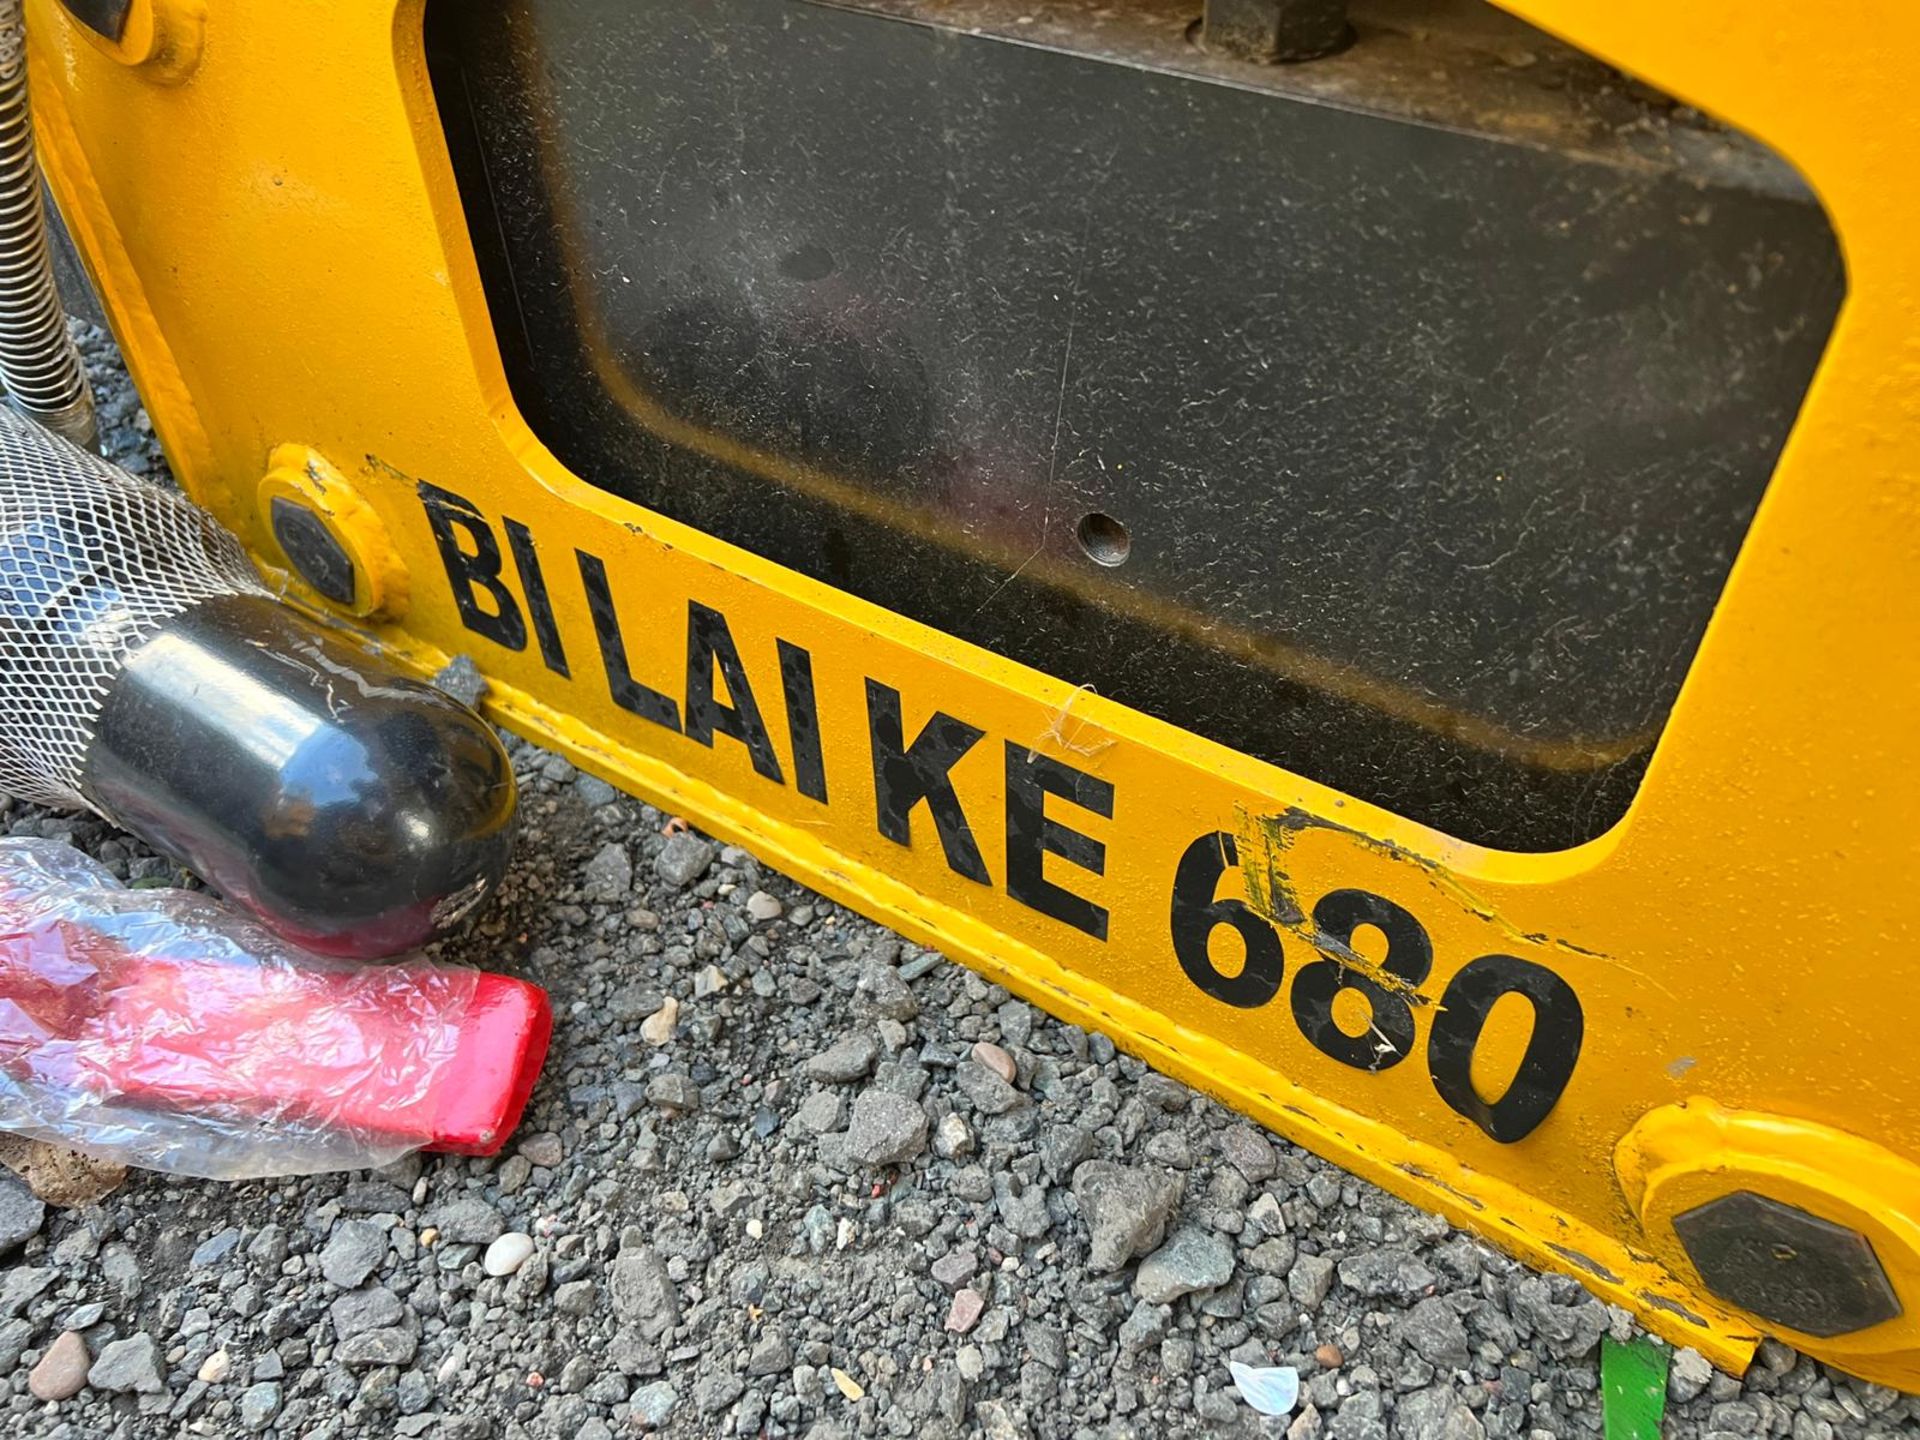 New And Unused Bilaike 680 Rock Breaker *PLUS VAT* - Image 5 of 8